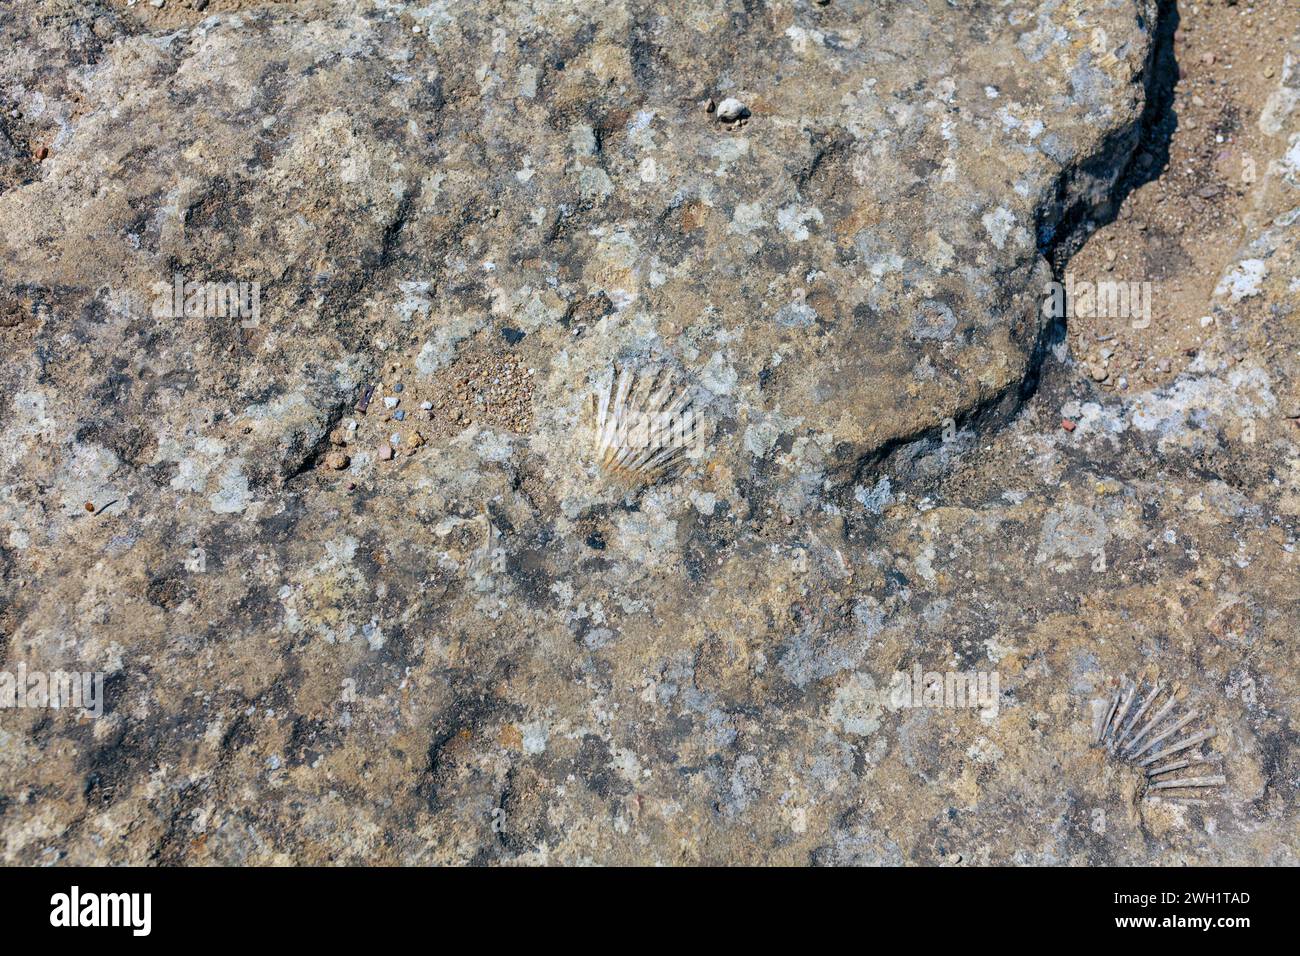 Fósiles en piedra, 200 msnm. Foto de stock